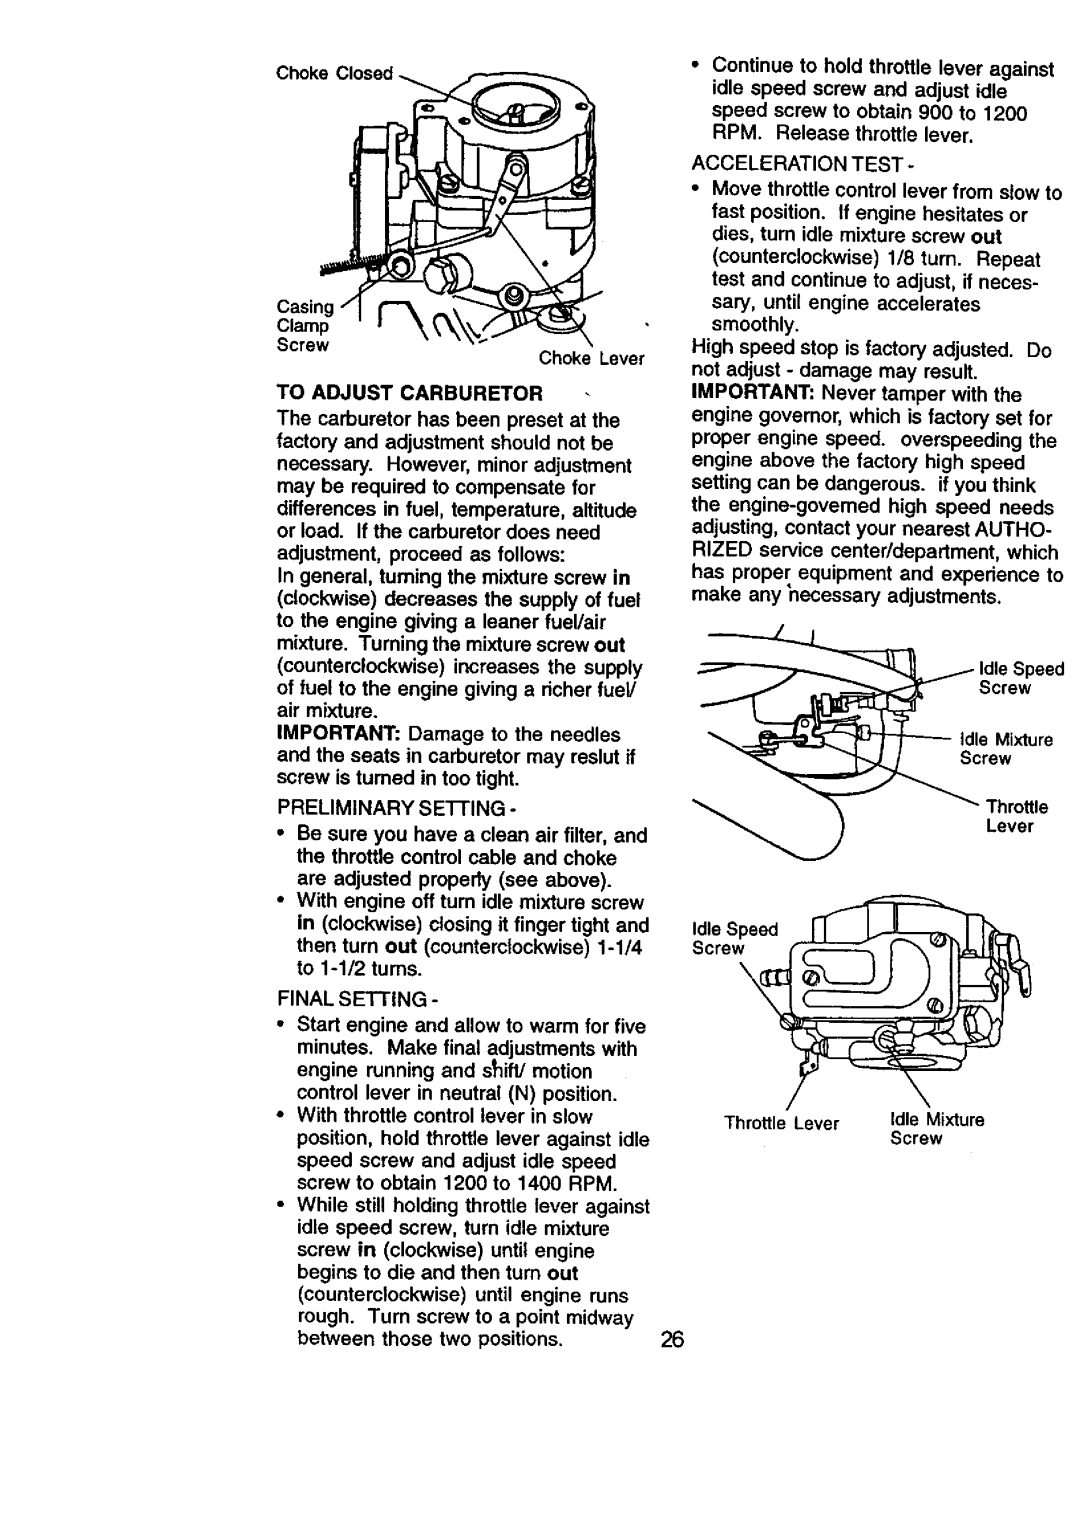 Craftsman 917.270831 owner manual To Adjust Carburetor, Preliminary S EI-IING, Acceleration Test 